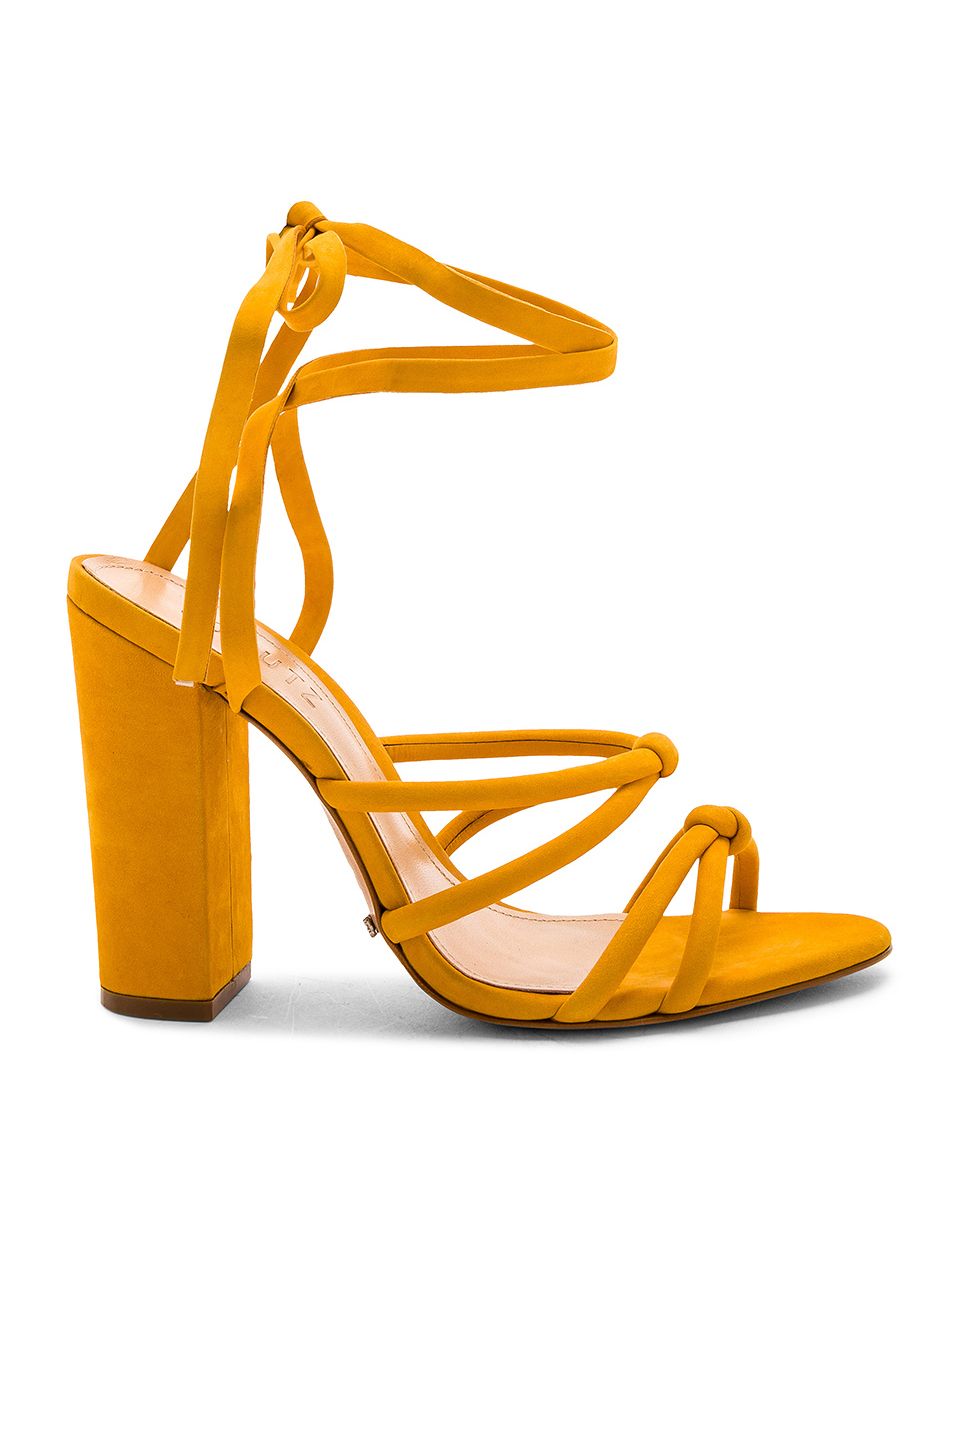 marigold color shoes